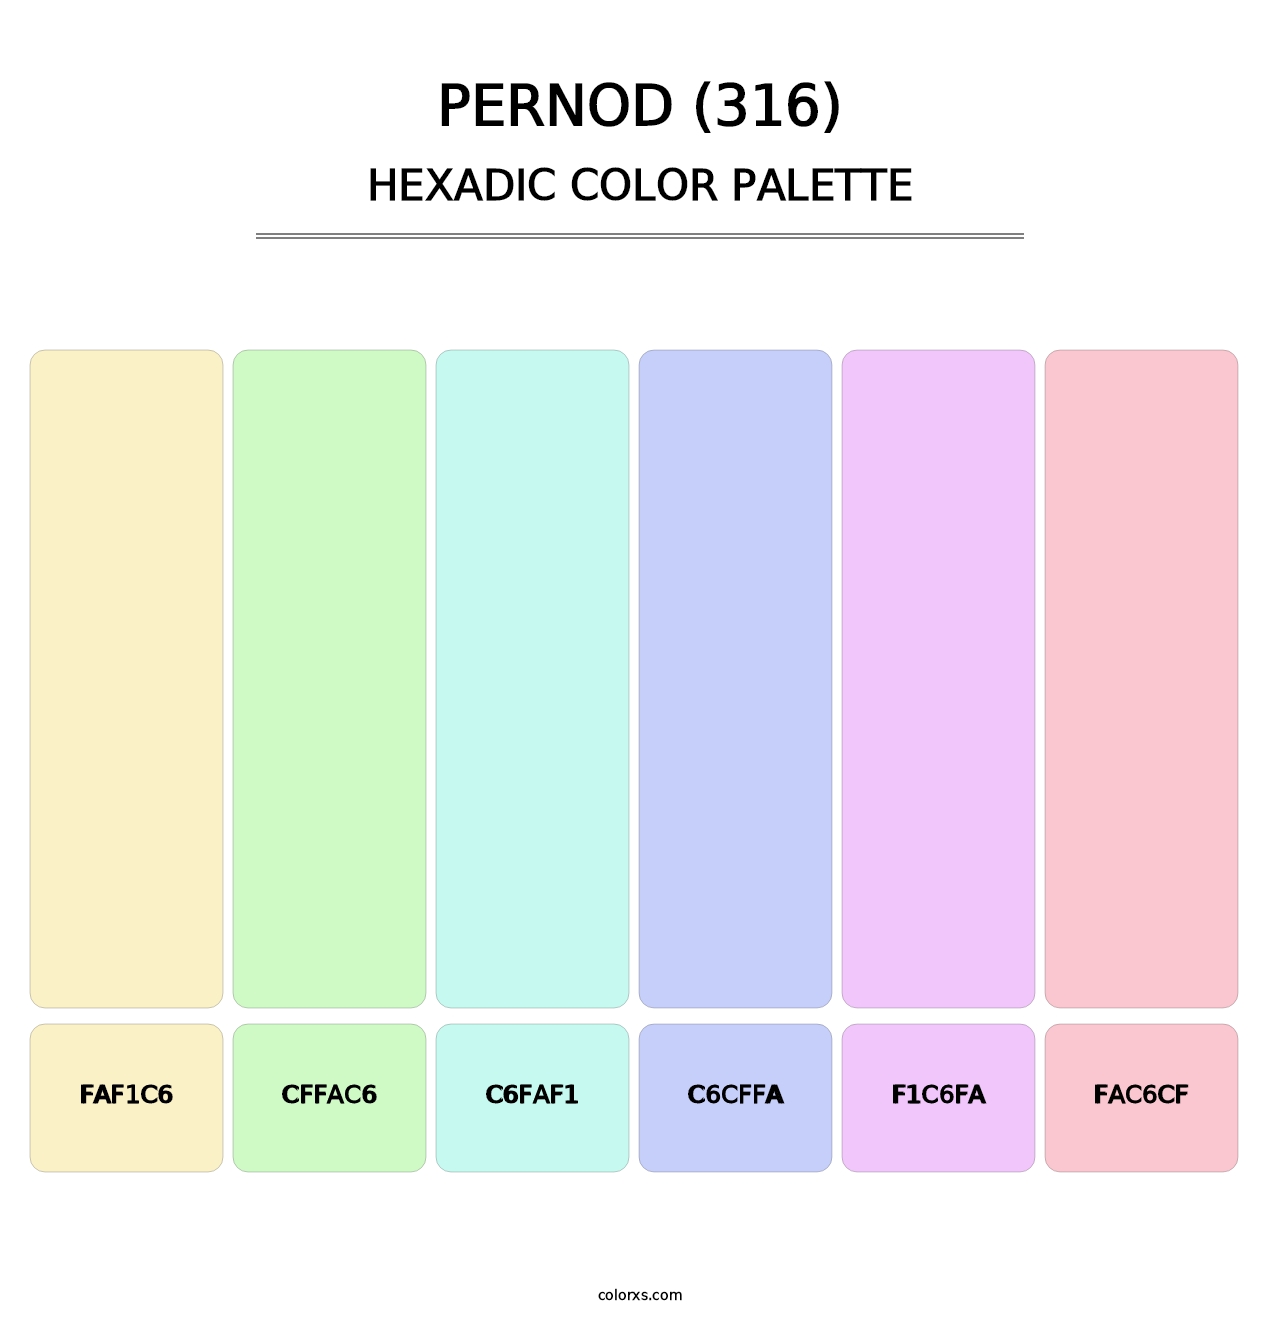 Pernod (316) - Hexadic Color Palette